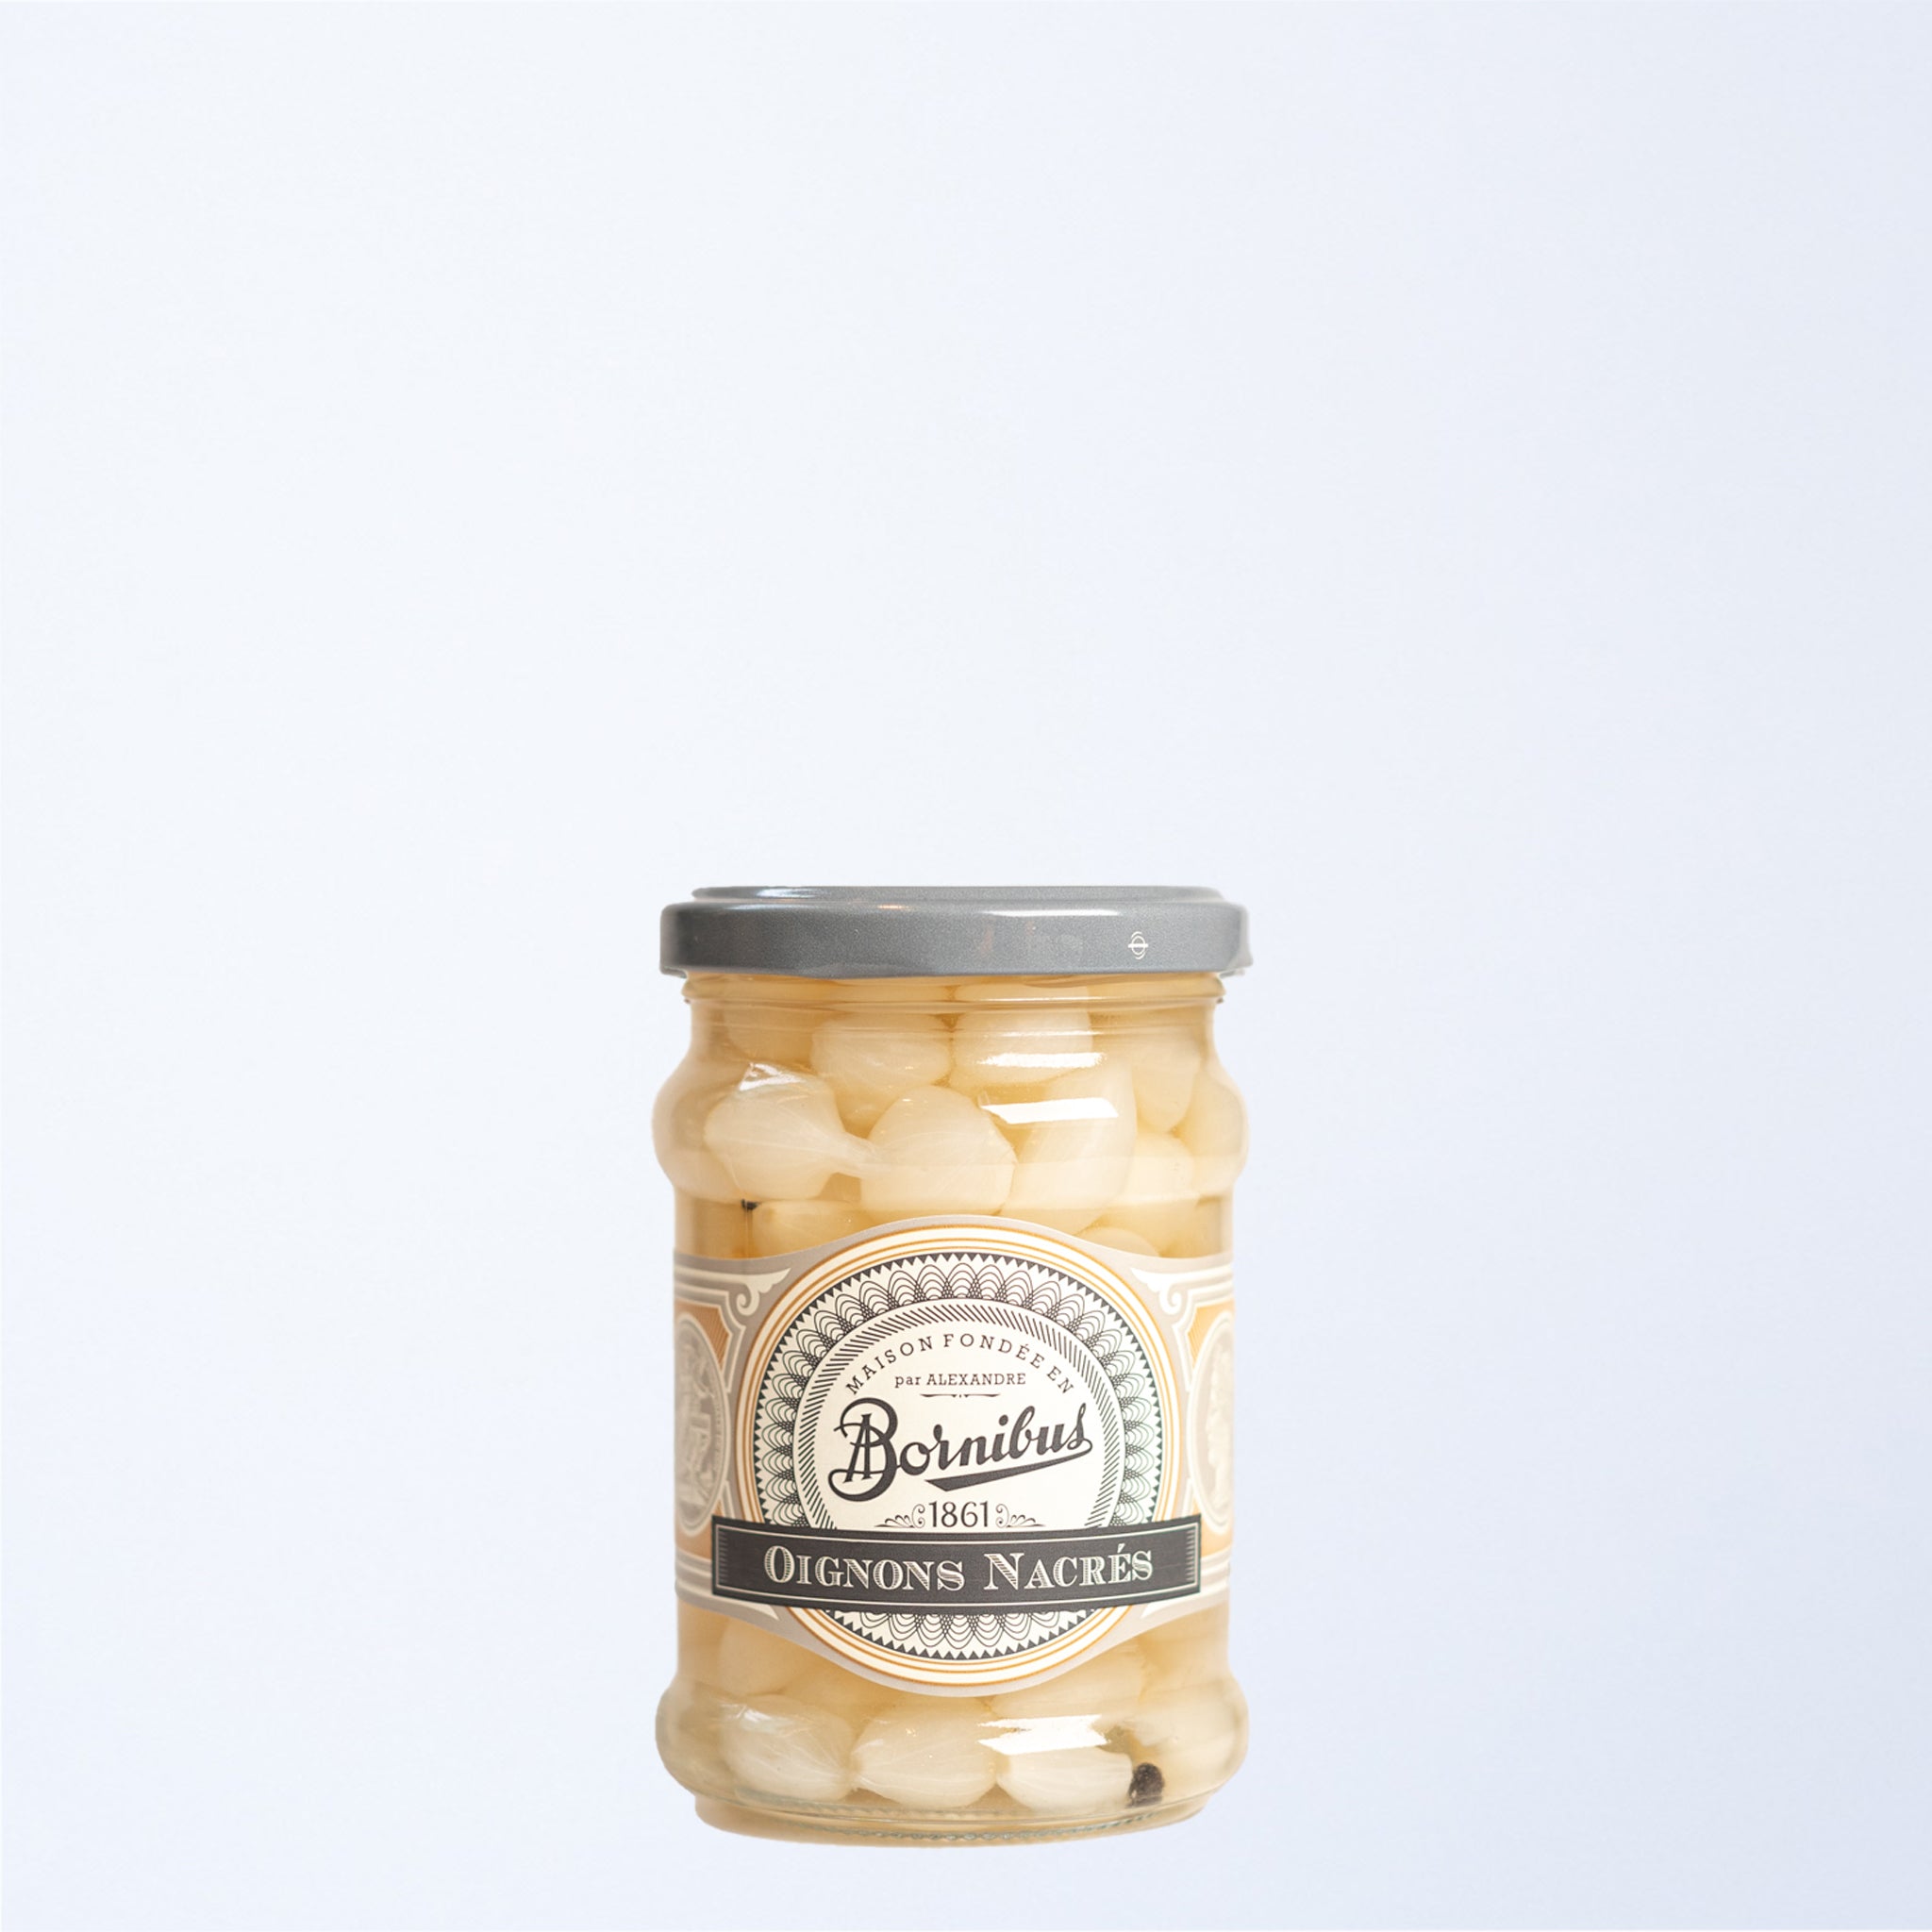 A jar of Bornibus Pearl Onions 260g.